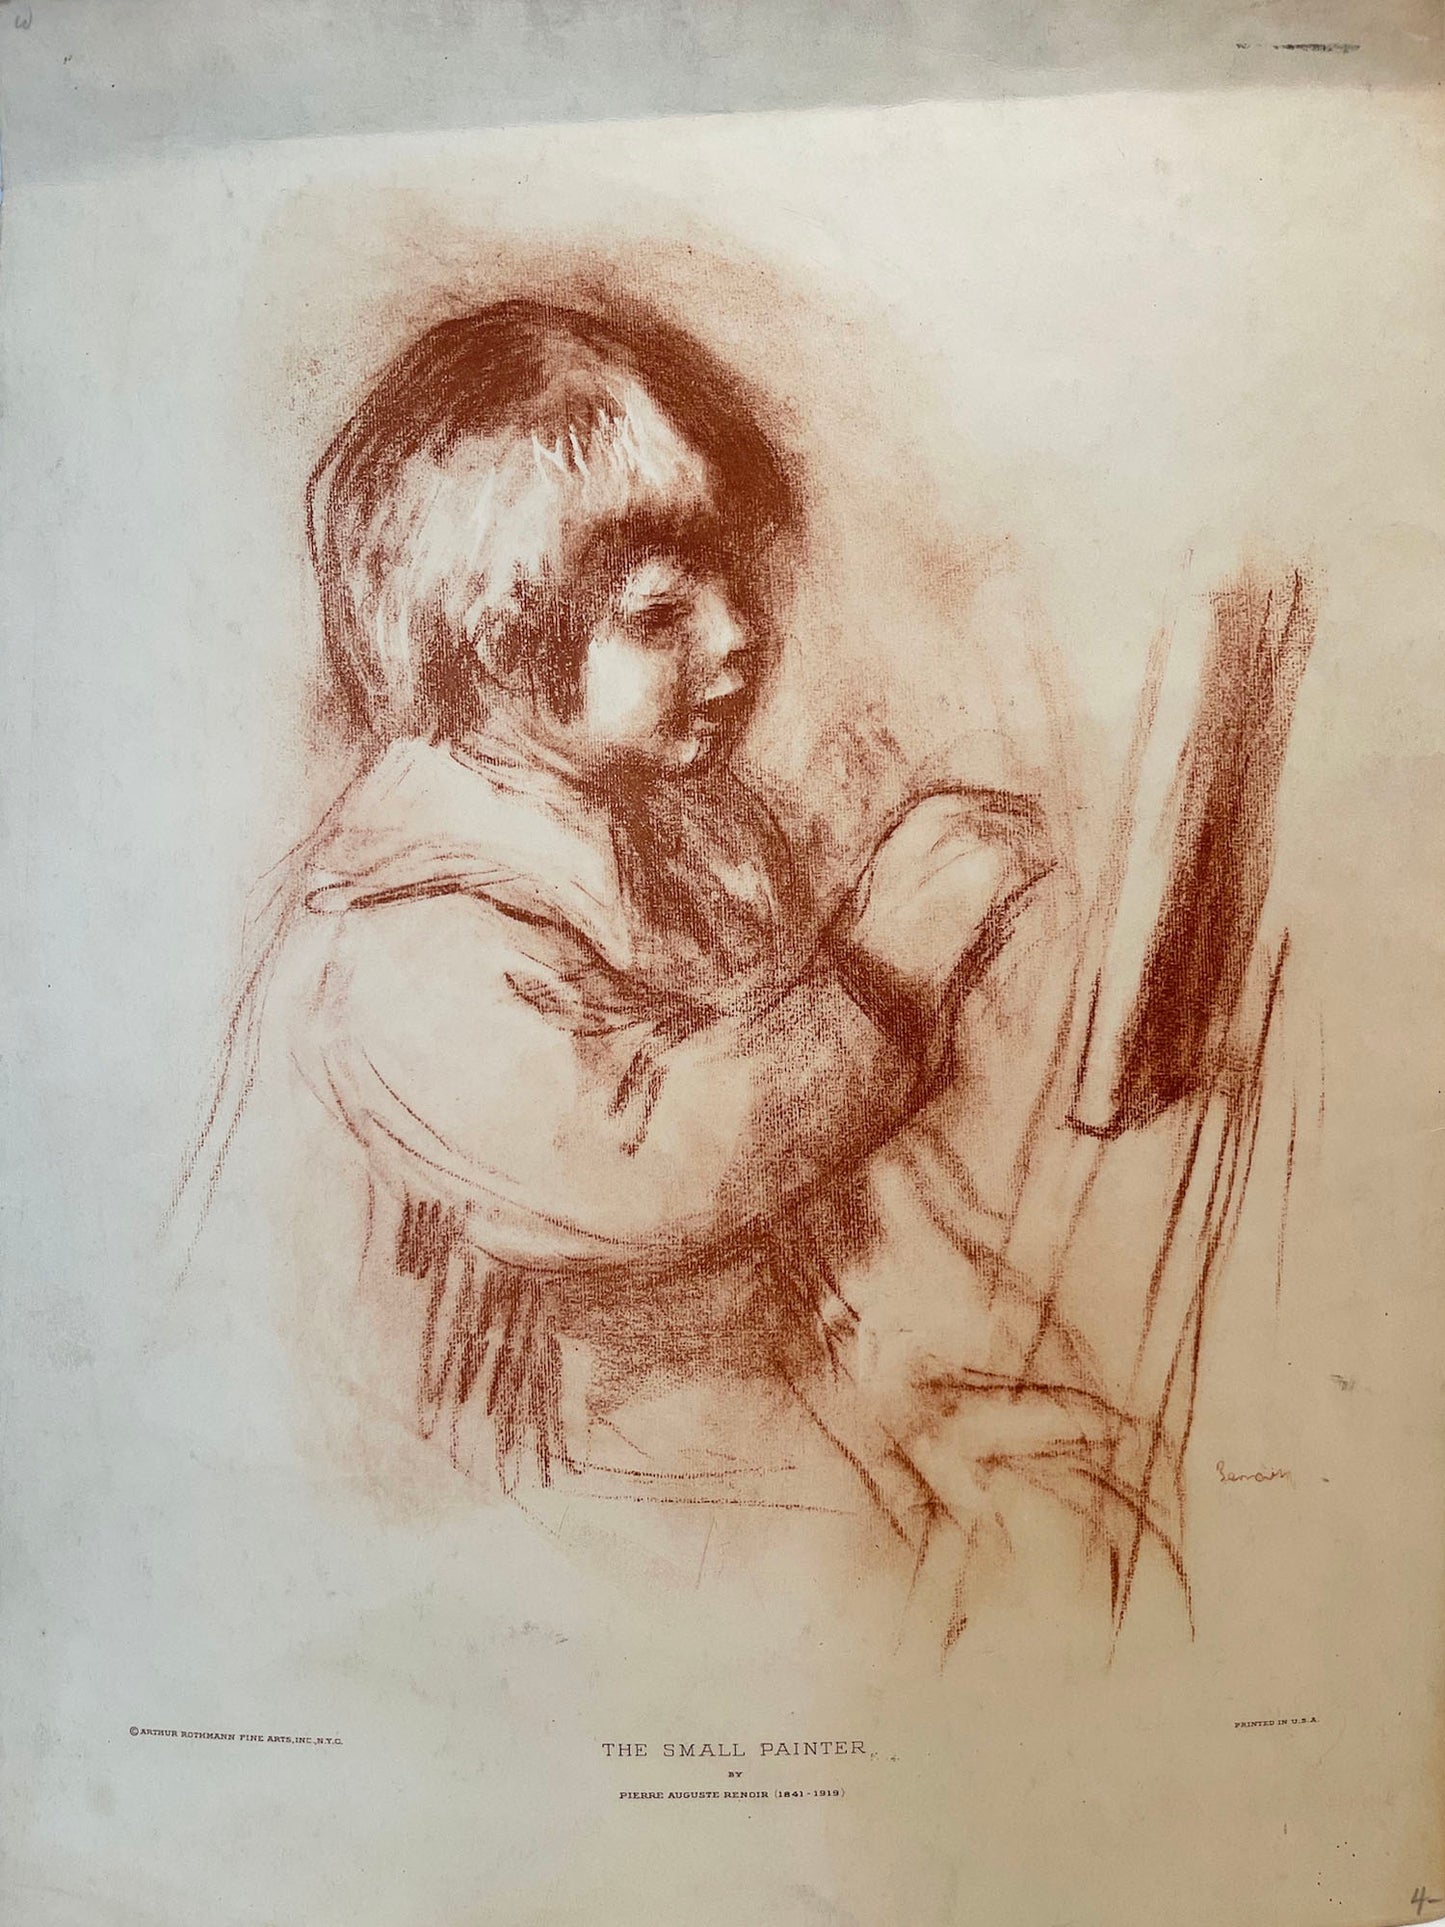 Pierre-Auguste Renoir Lithograph: "The Small Painter"